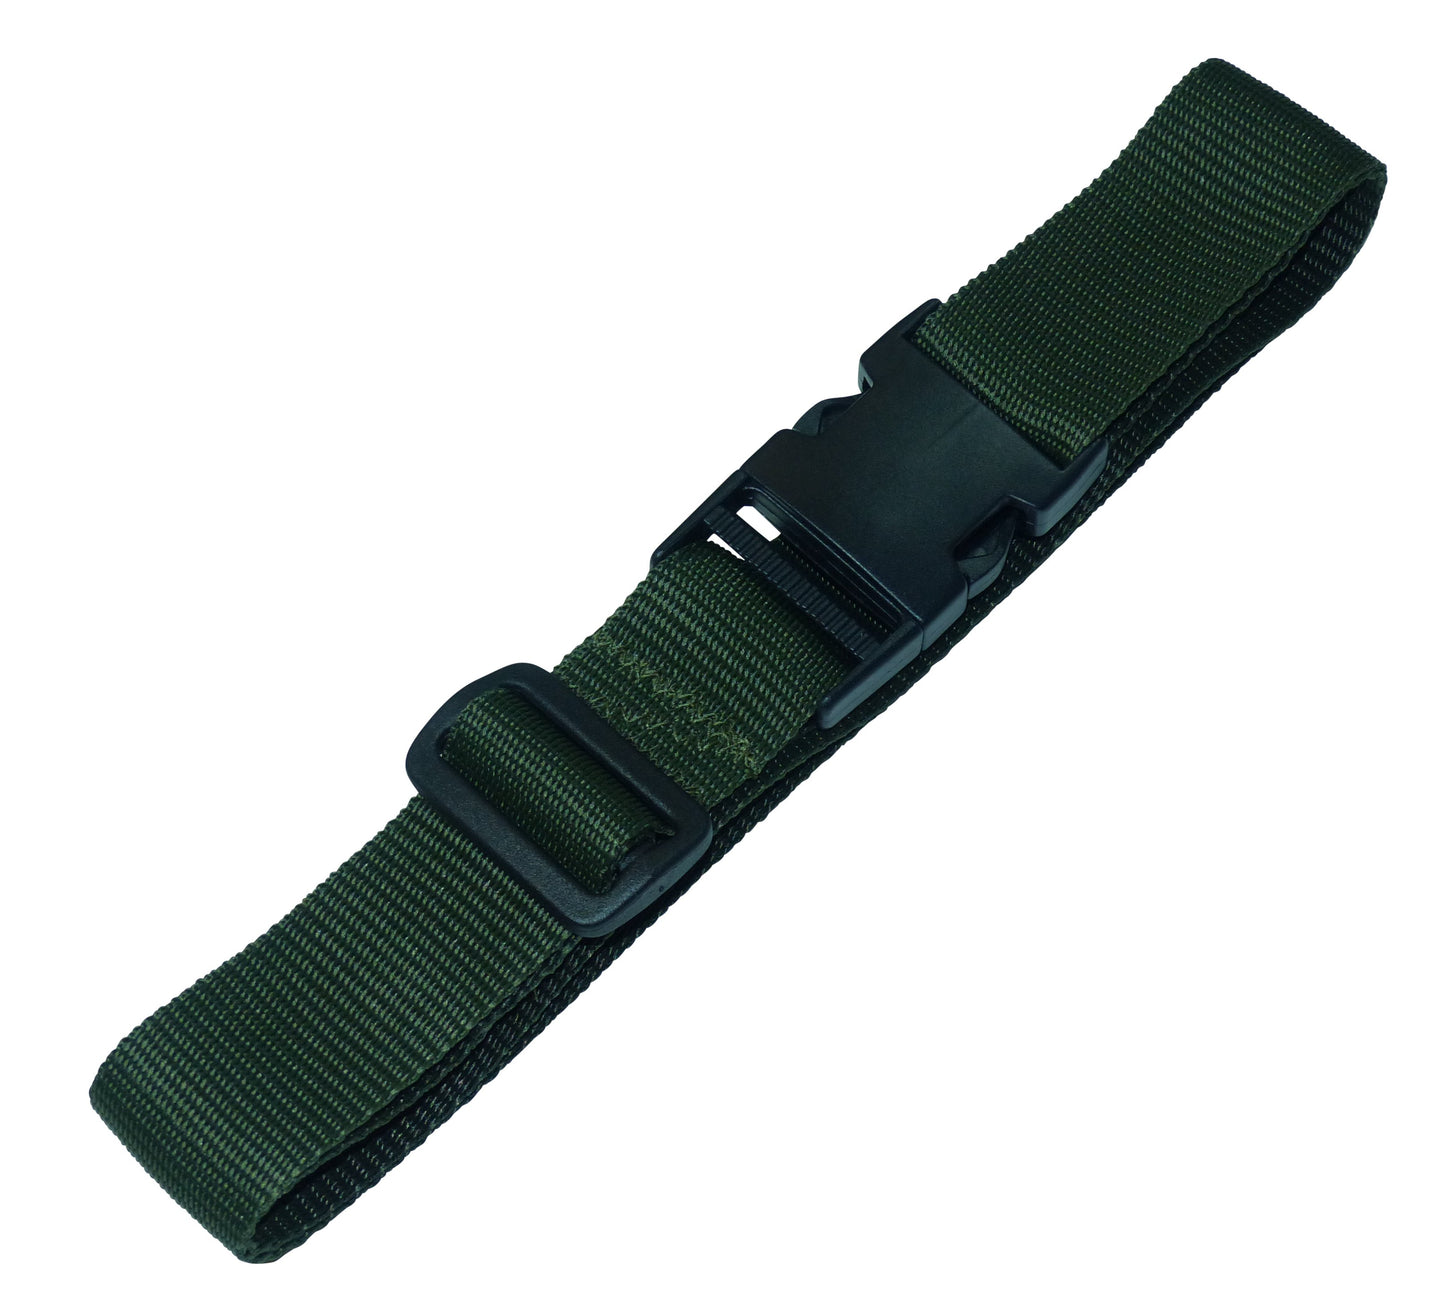 Benristraps 38mm Webbing Strap with Quick Release & Length-Adjusting Buckles in olive green